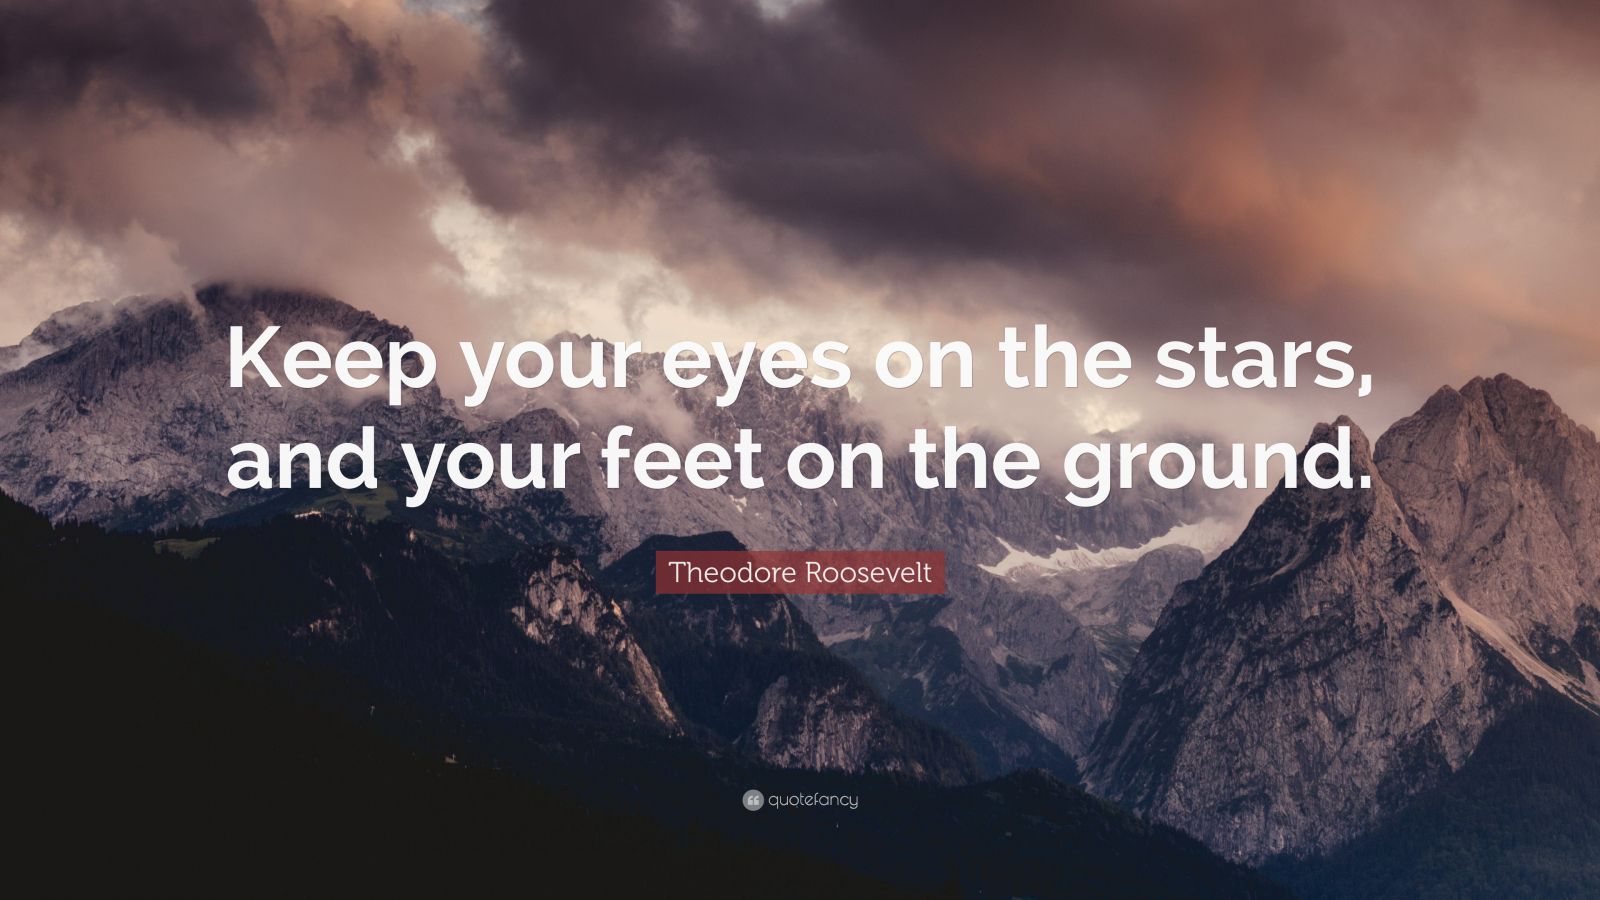 Theodore Roosevelt Quote: 